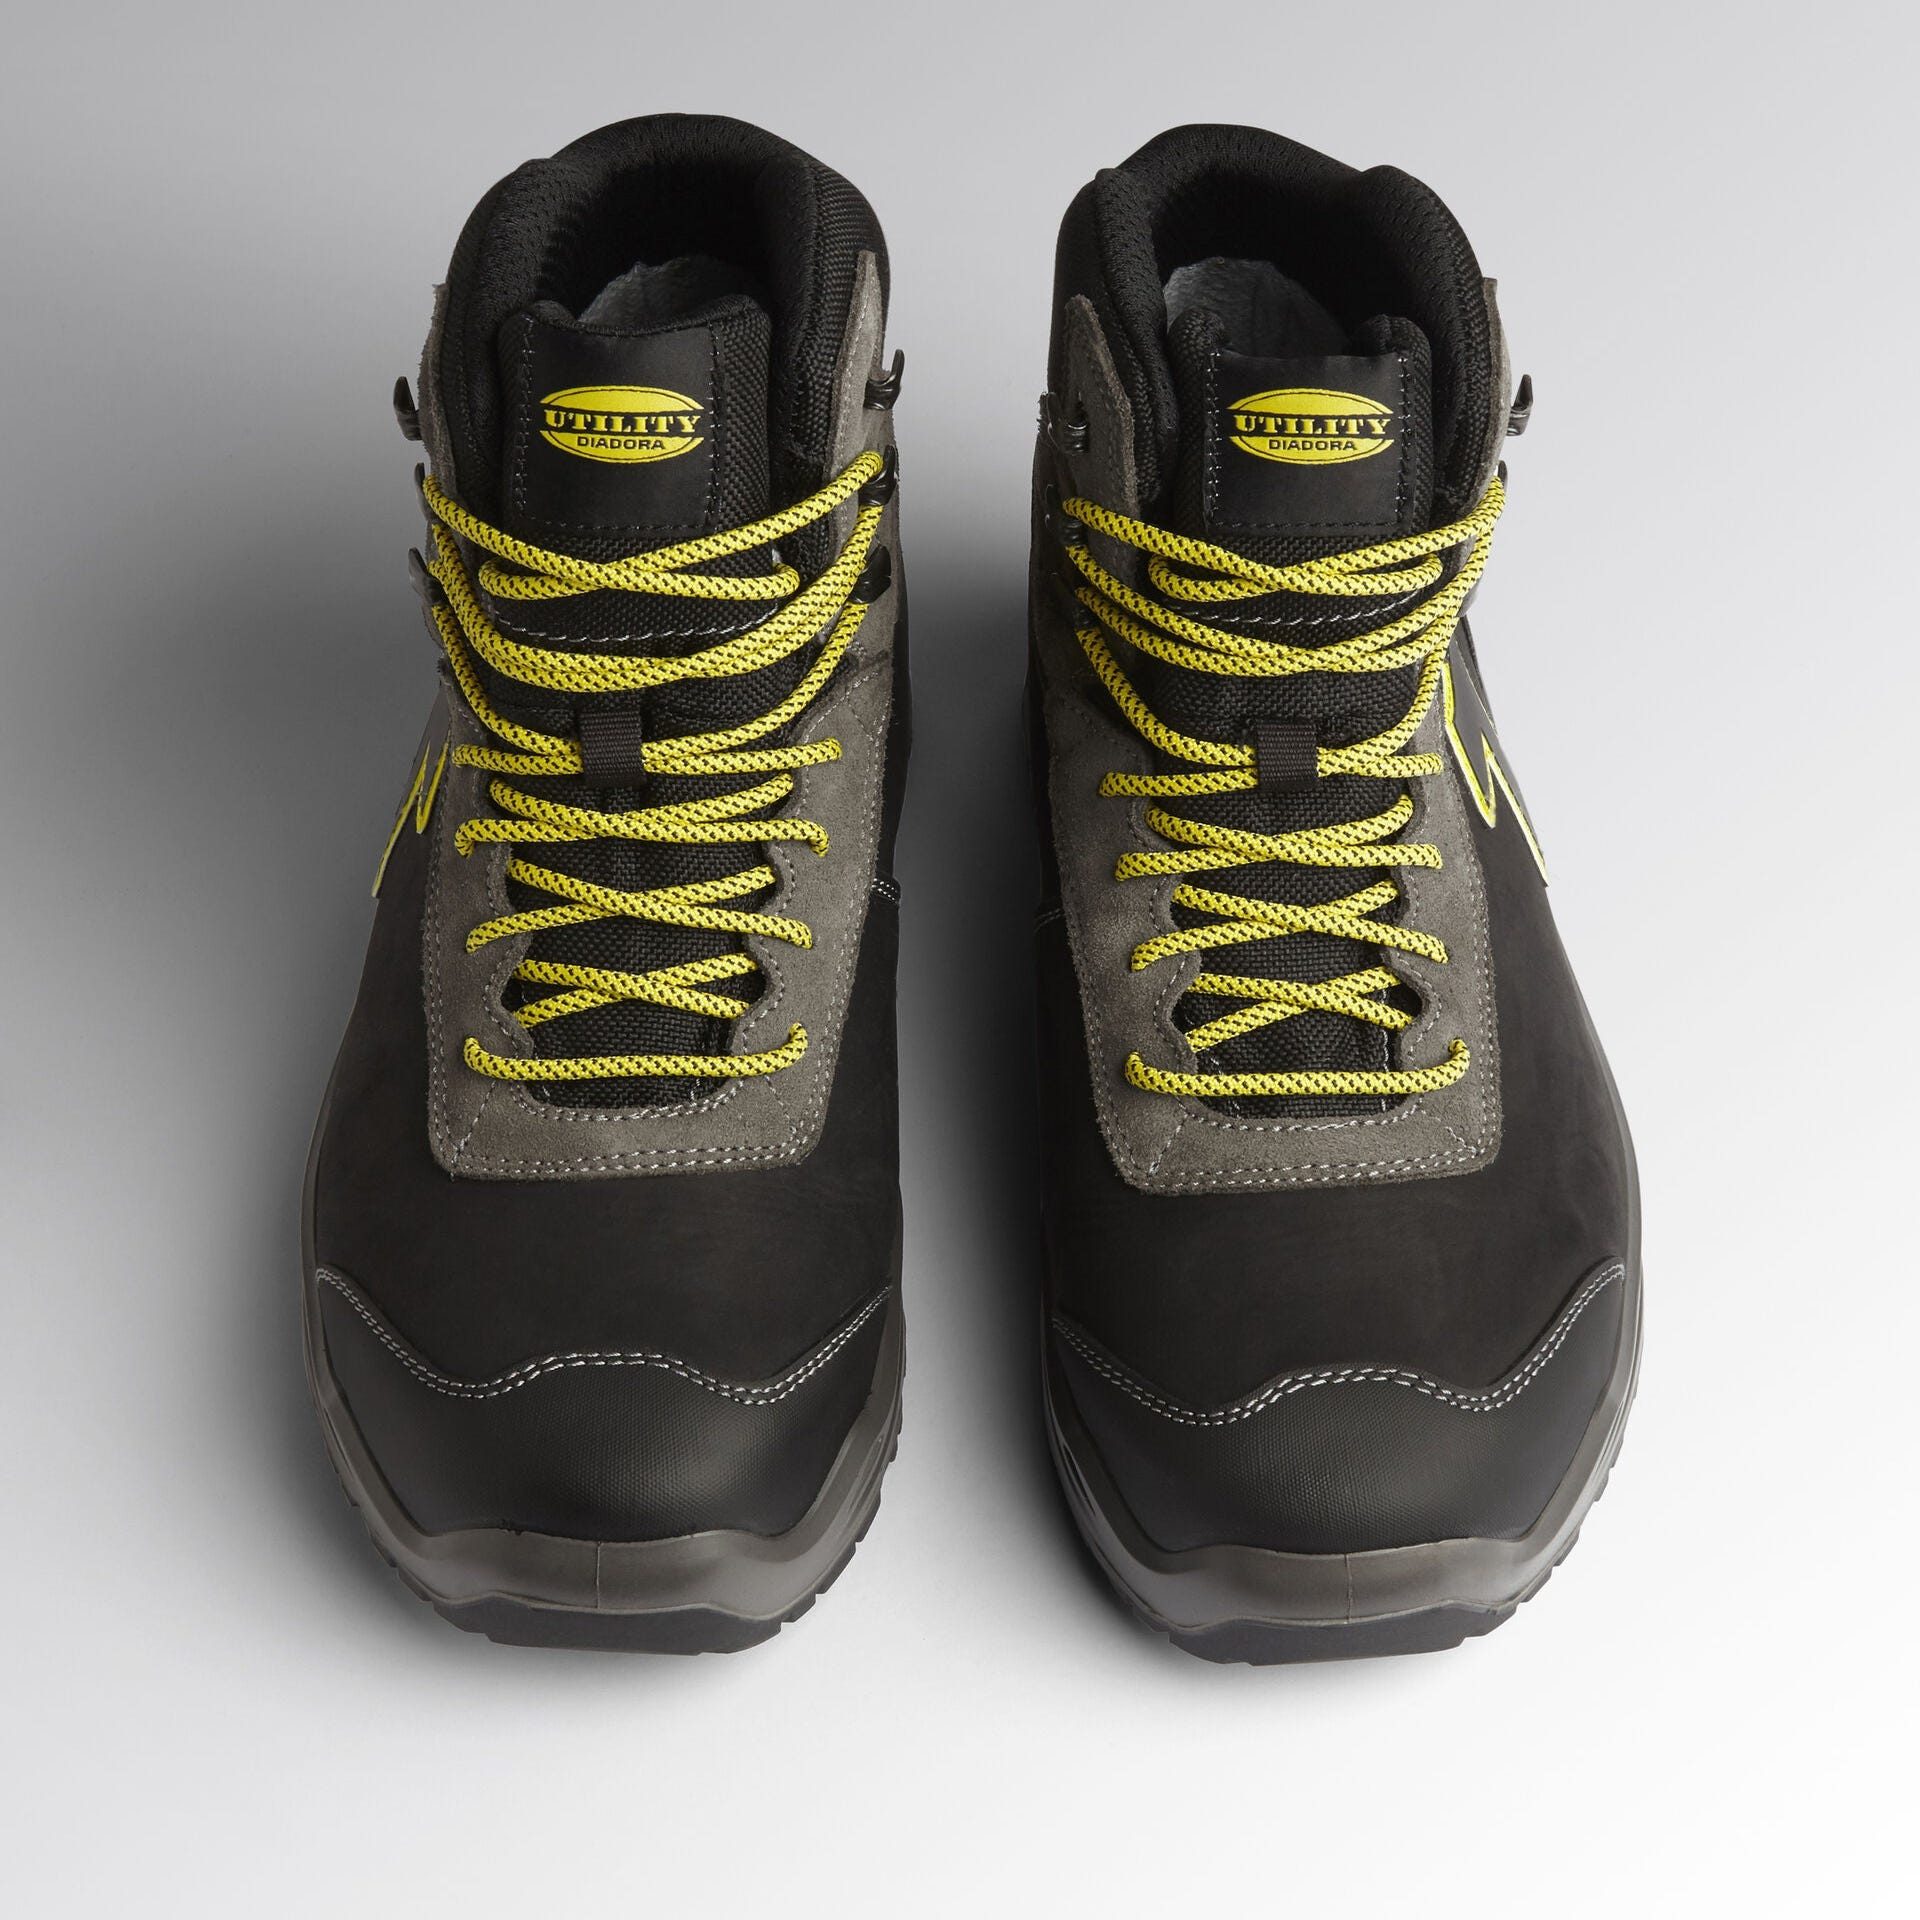 Chaussures S3 imperméables thermo-isolantes Diadora Noir / Jaune 46 7